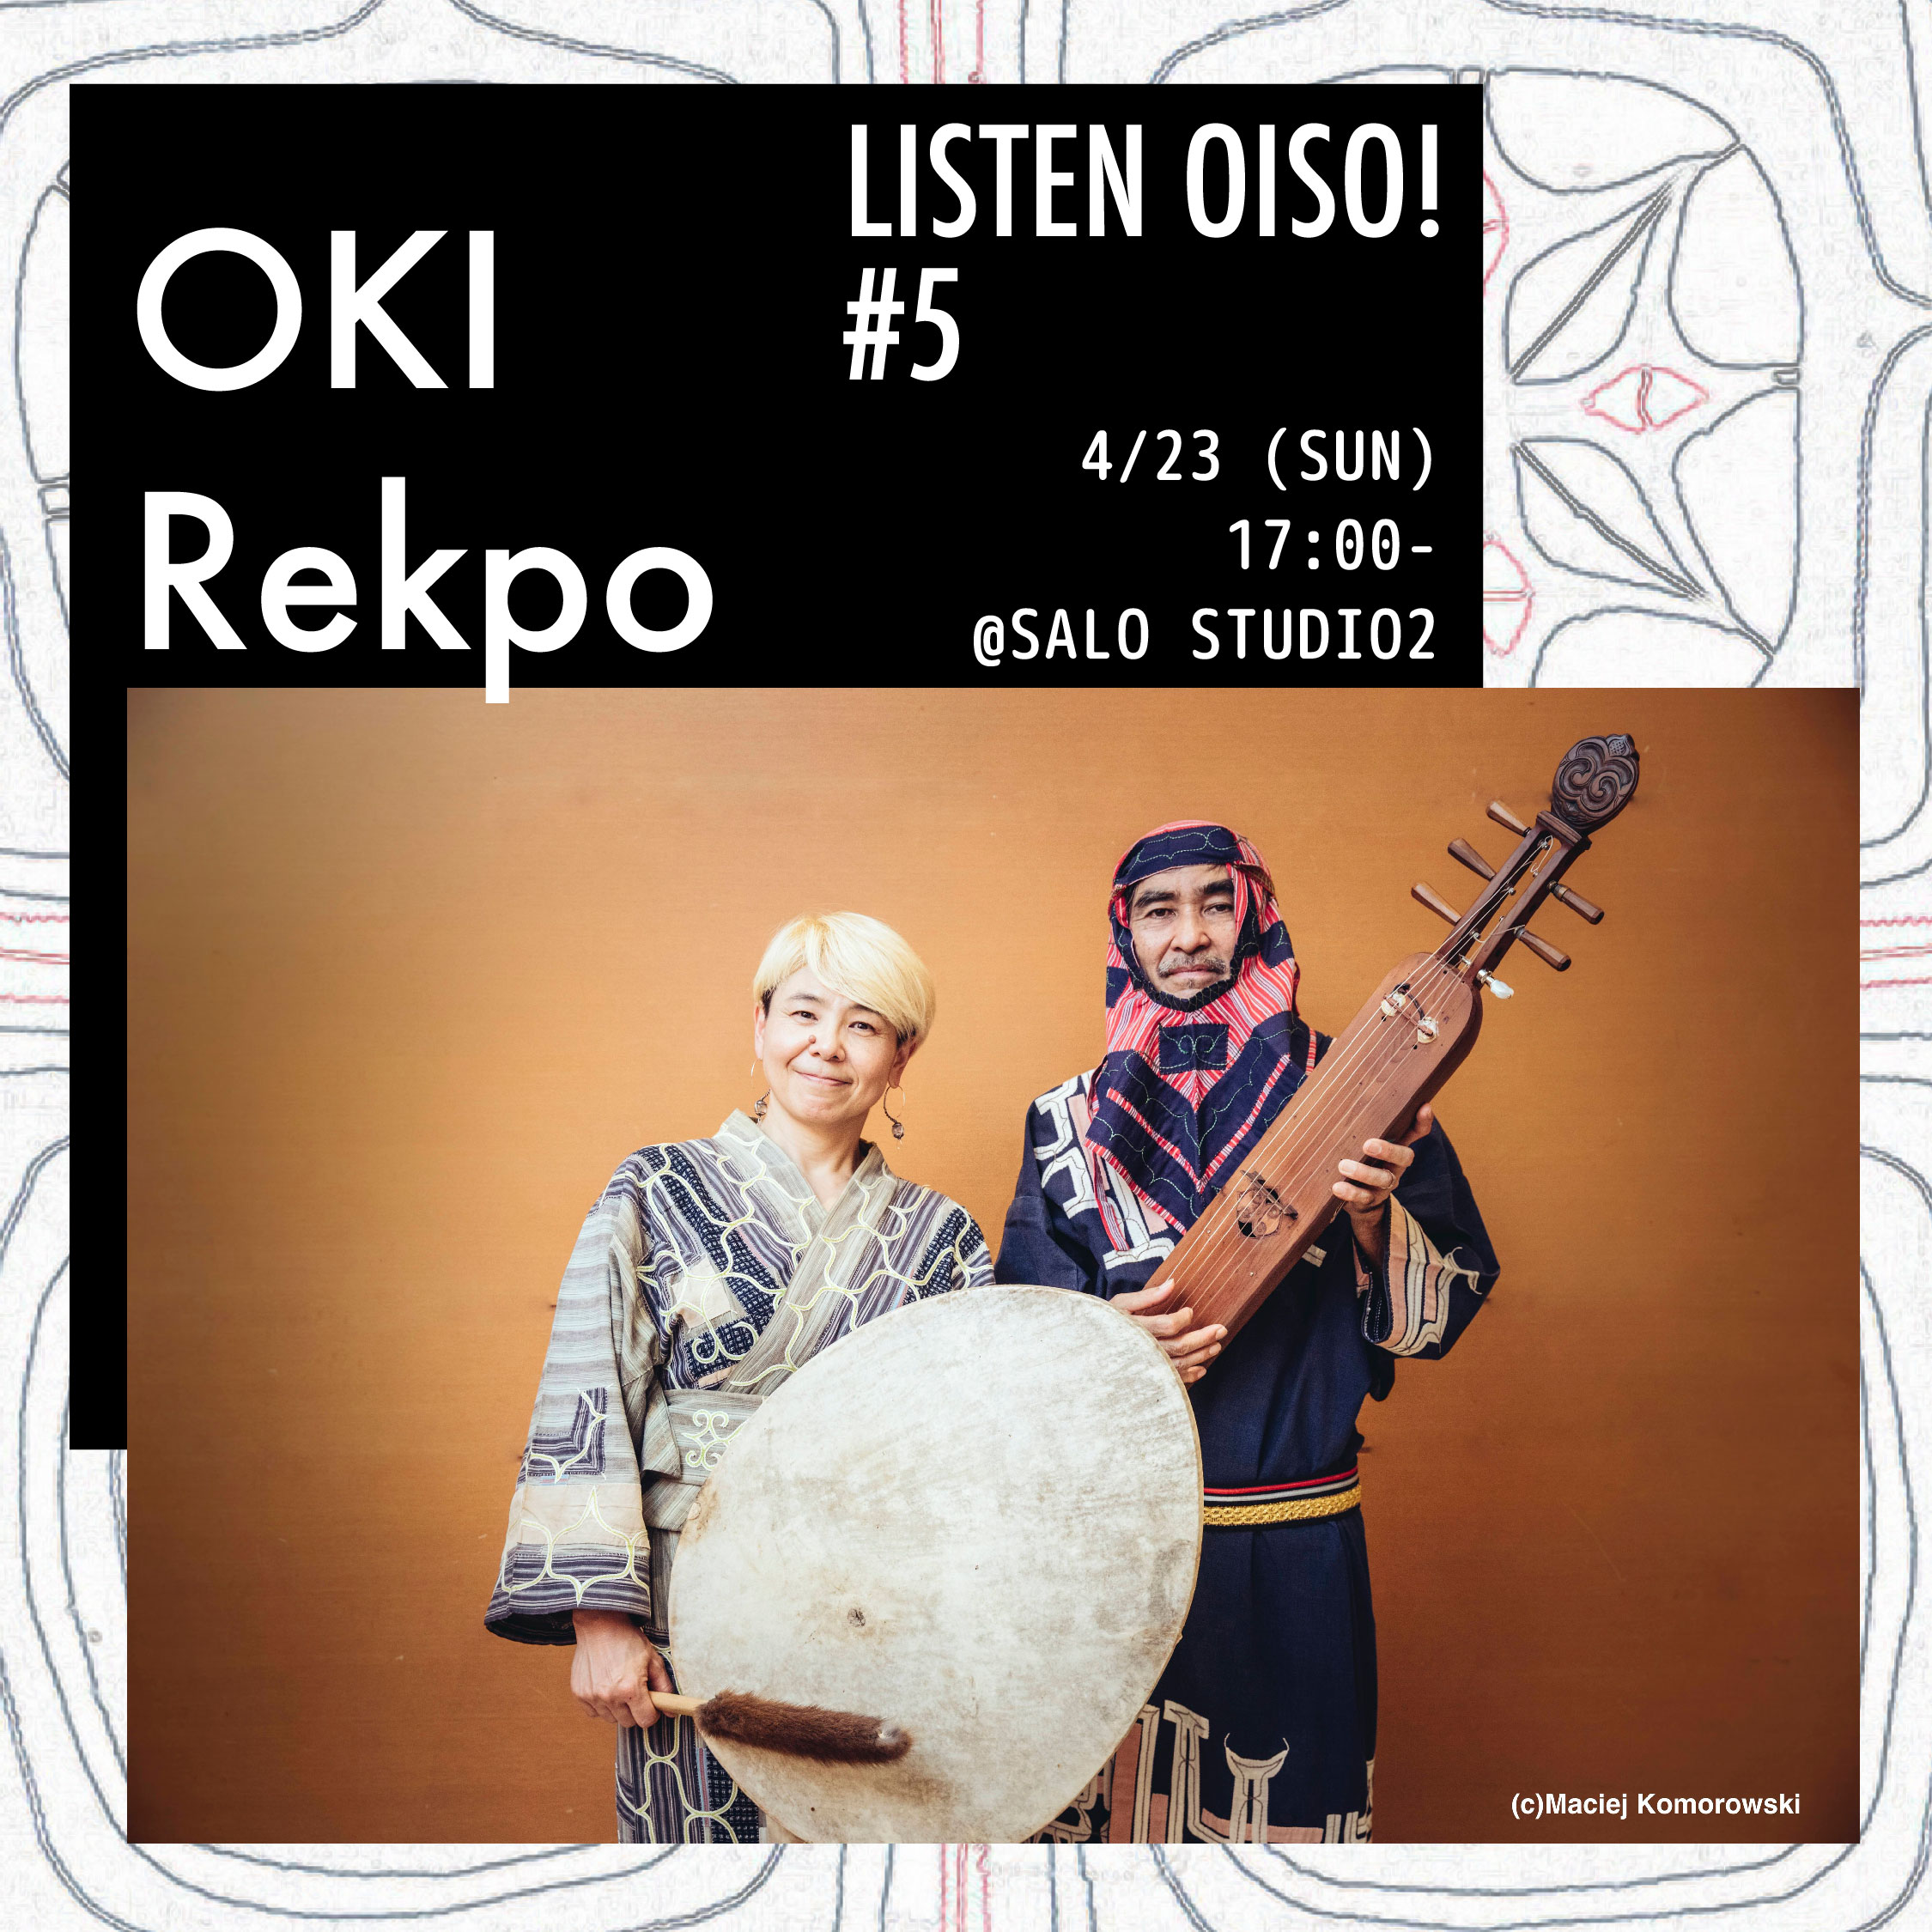 LISTEN OISO! #5 OKI, Rekpo